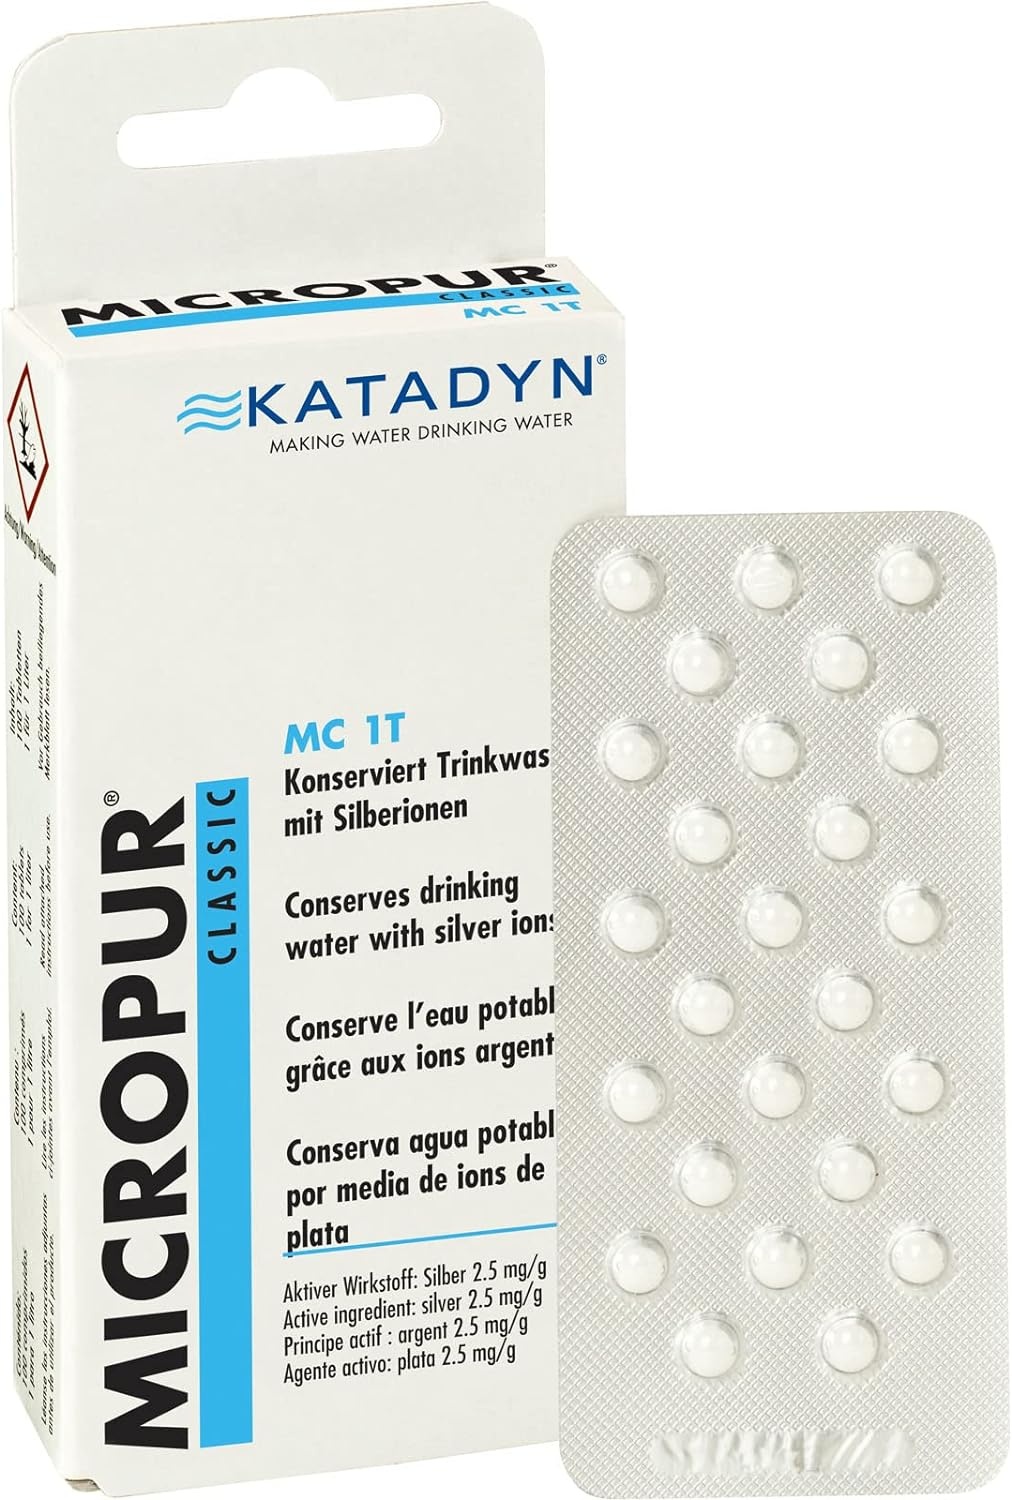 Katadyn Tratamiento de agua Micropur Classic MC 1T - 100 comprimidos